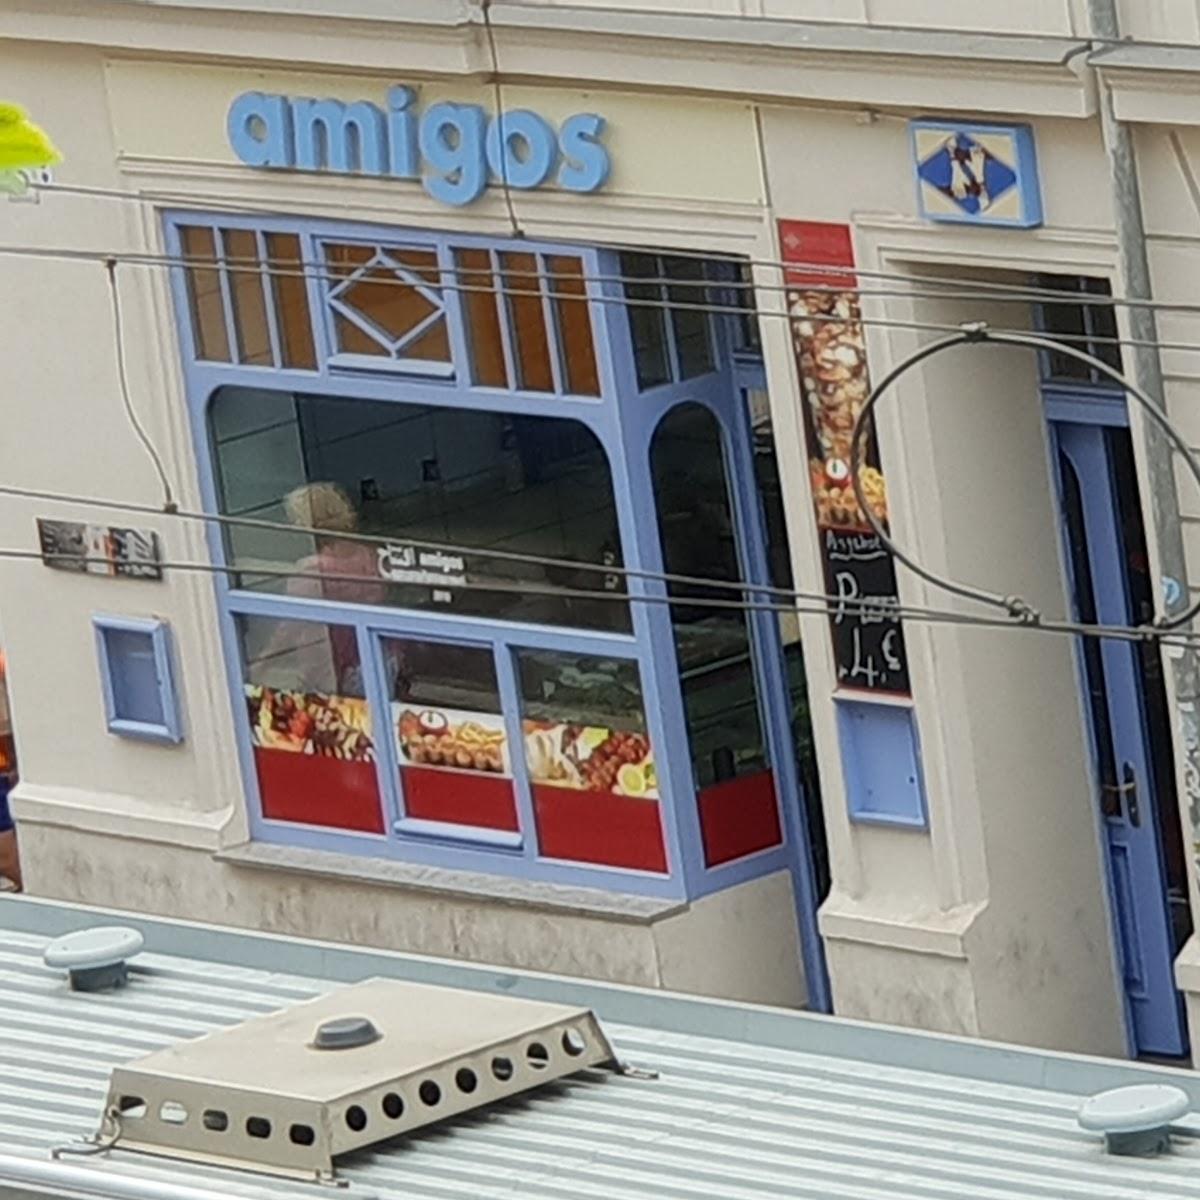 Restaurant "amigos" in Leipzig